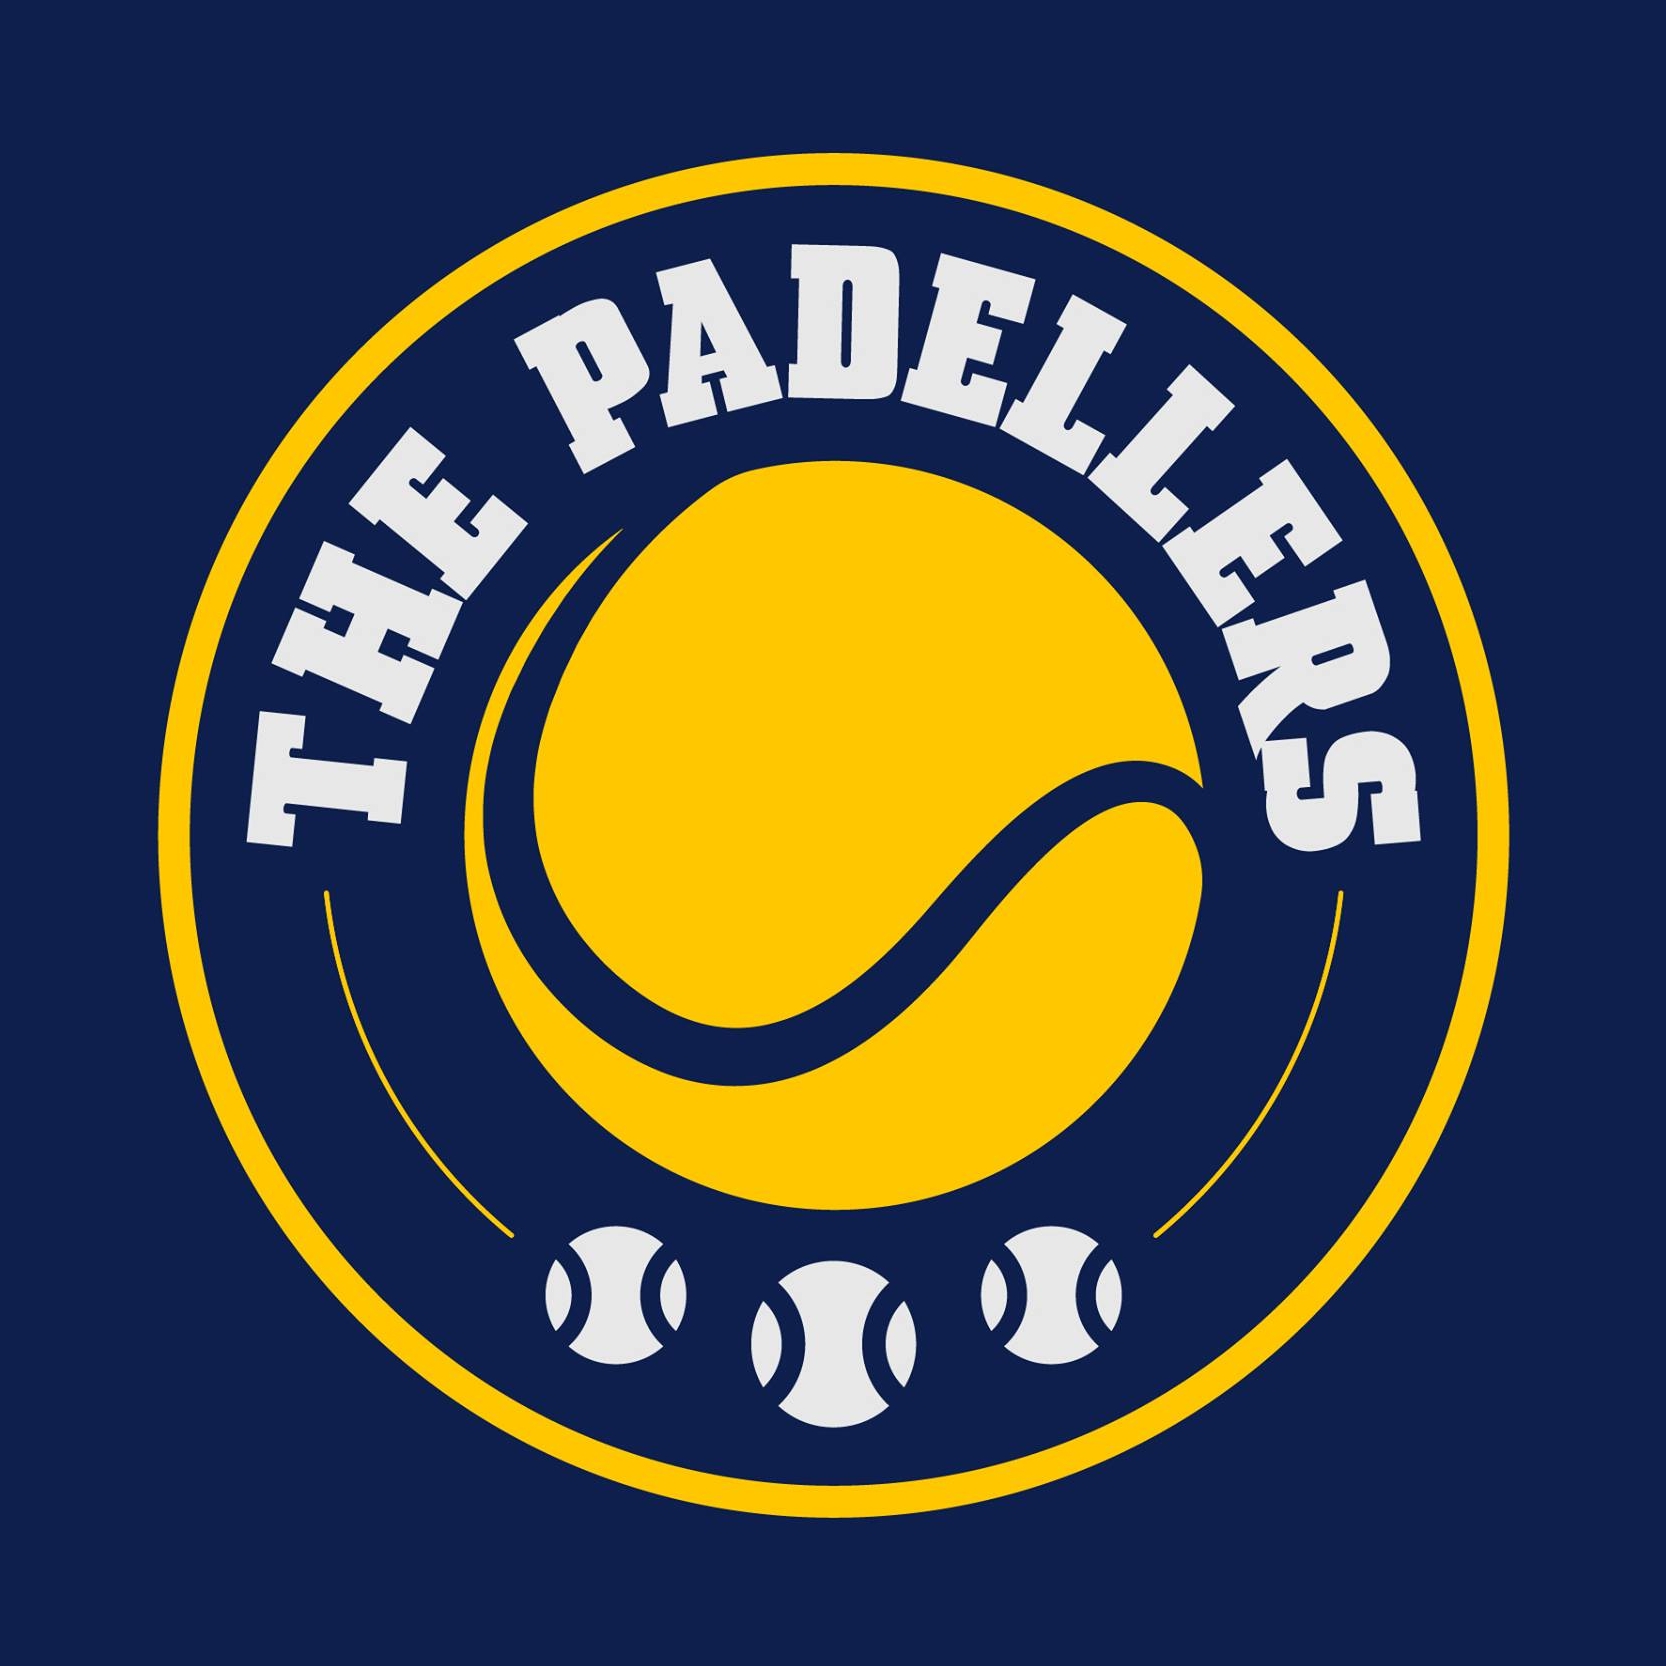 Profile image of venue The Padellers - Hengelo